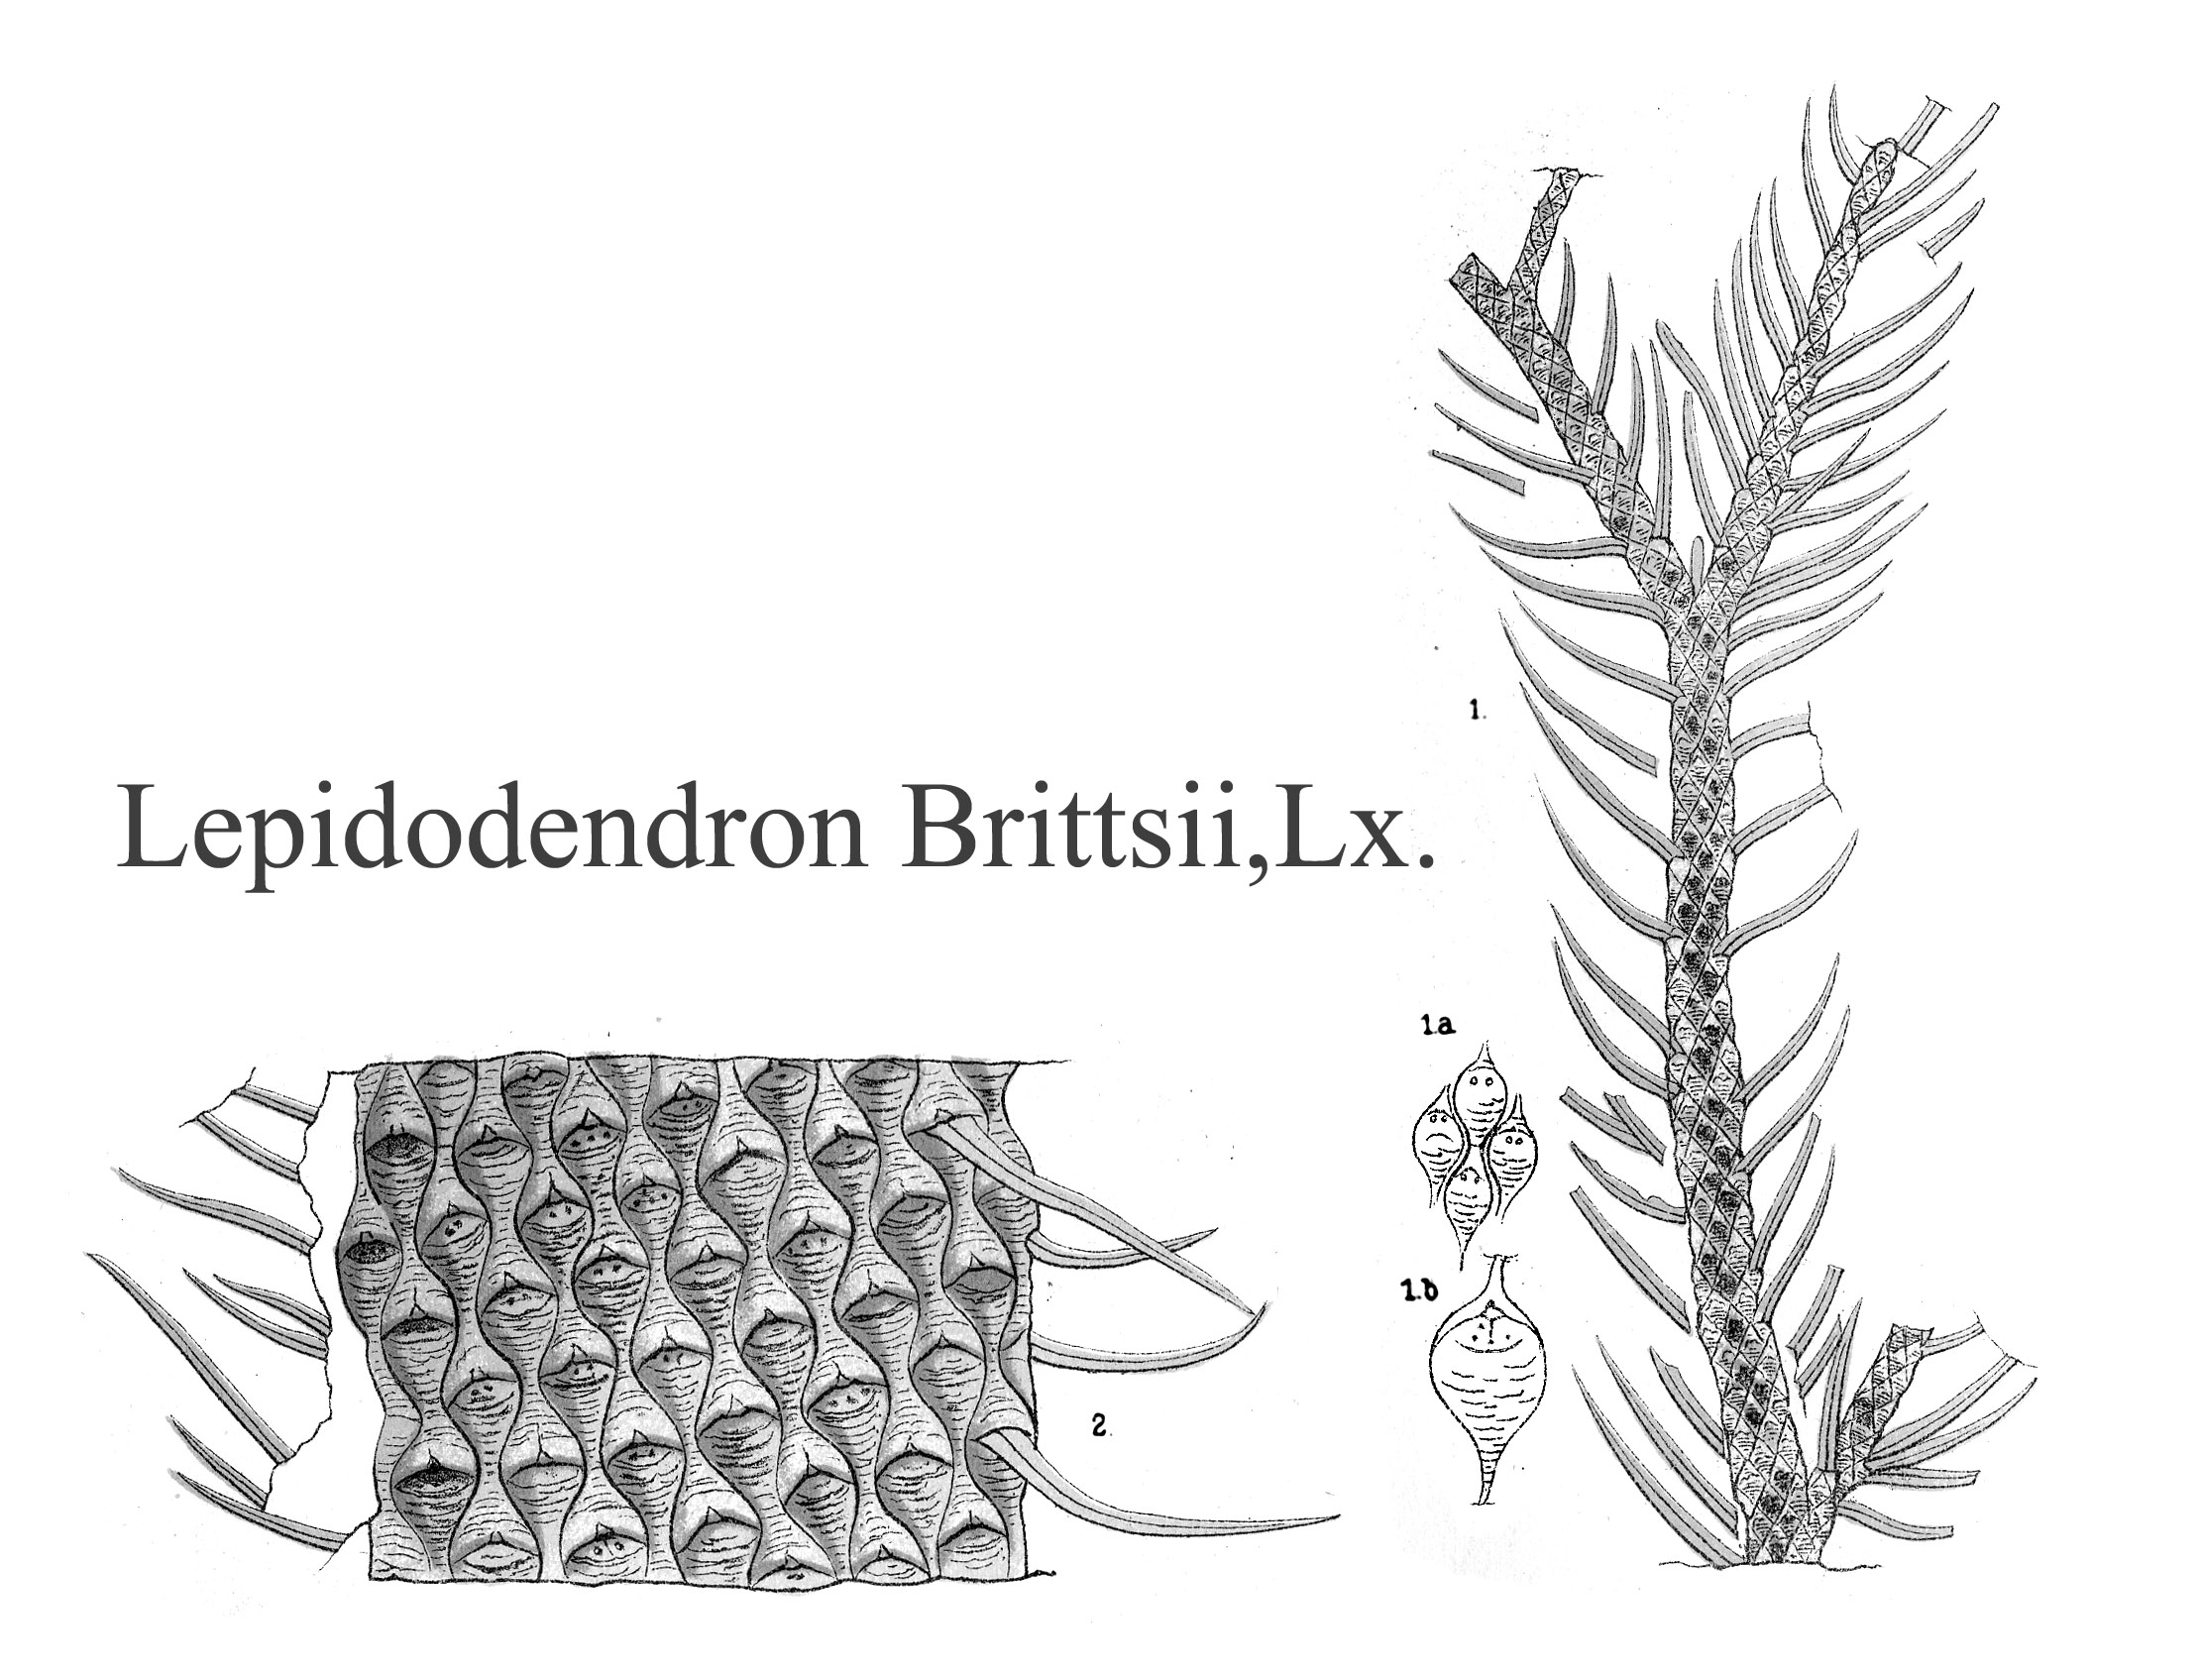 Lepidodendron Brittsii, PlateLXIII